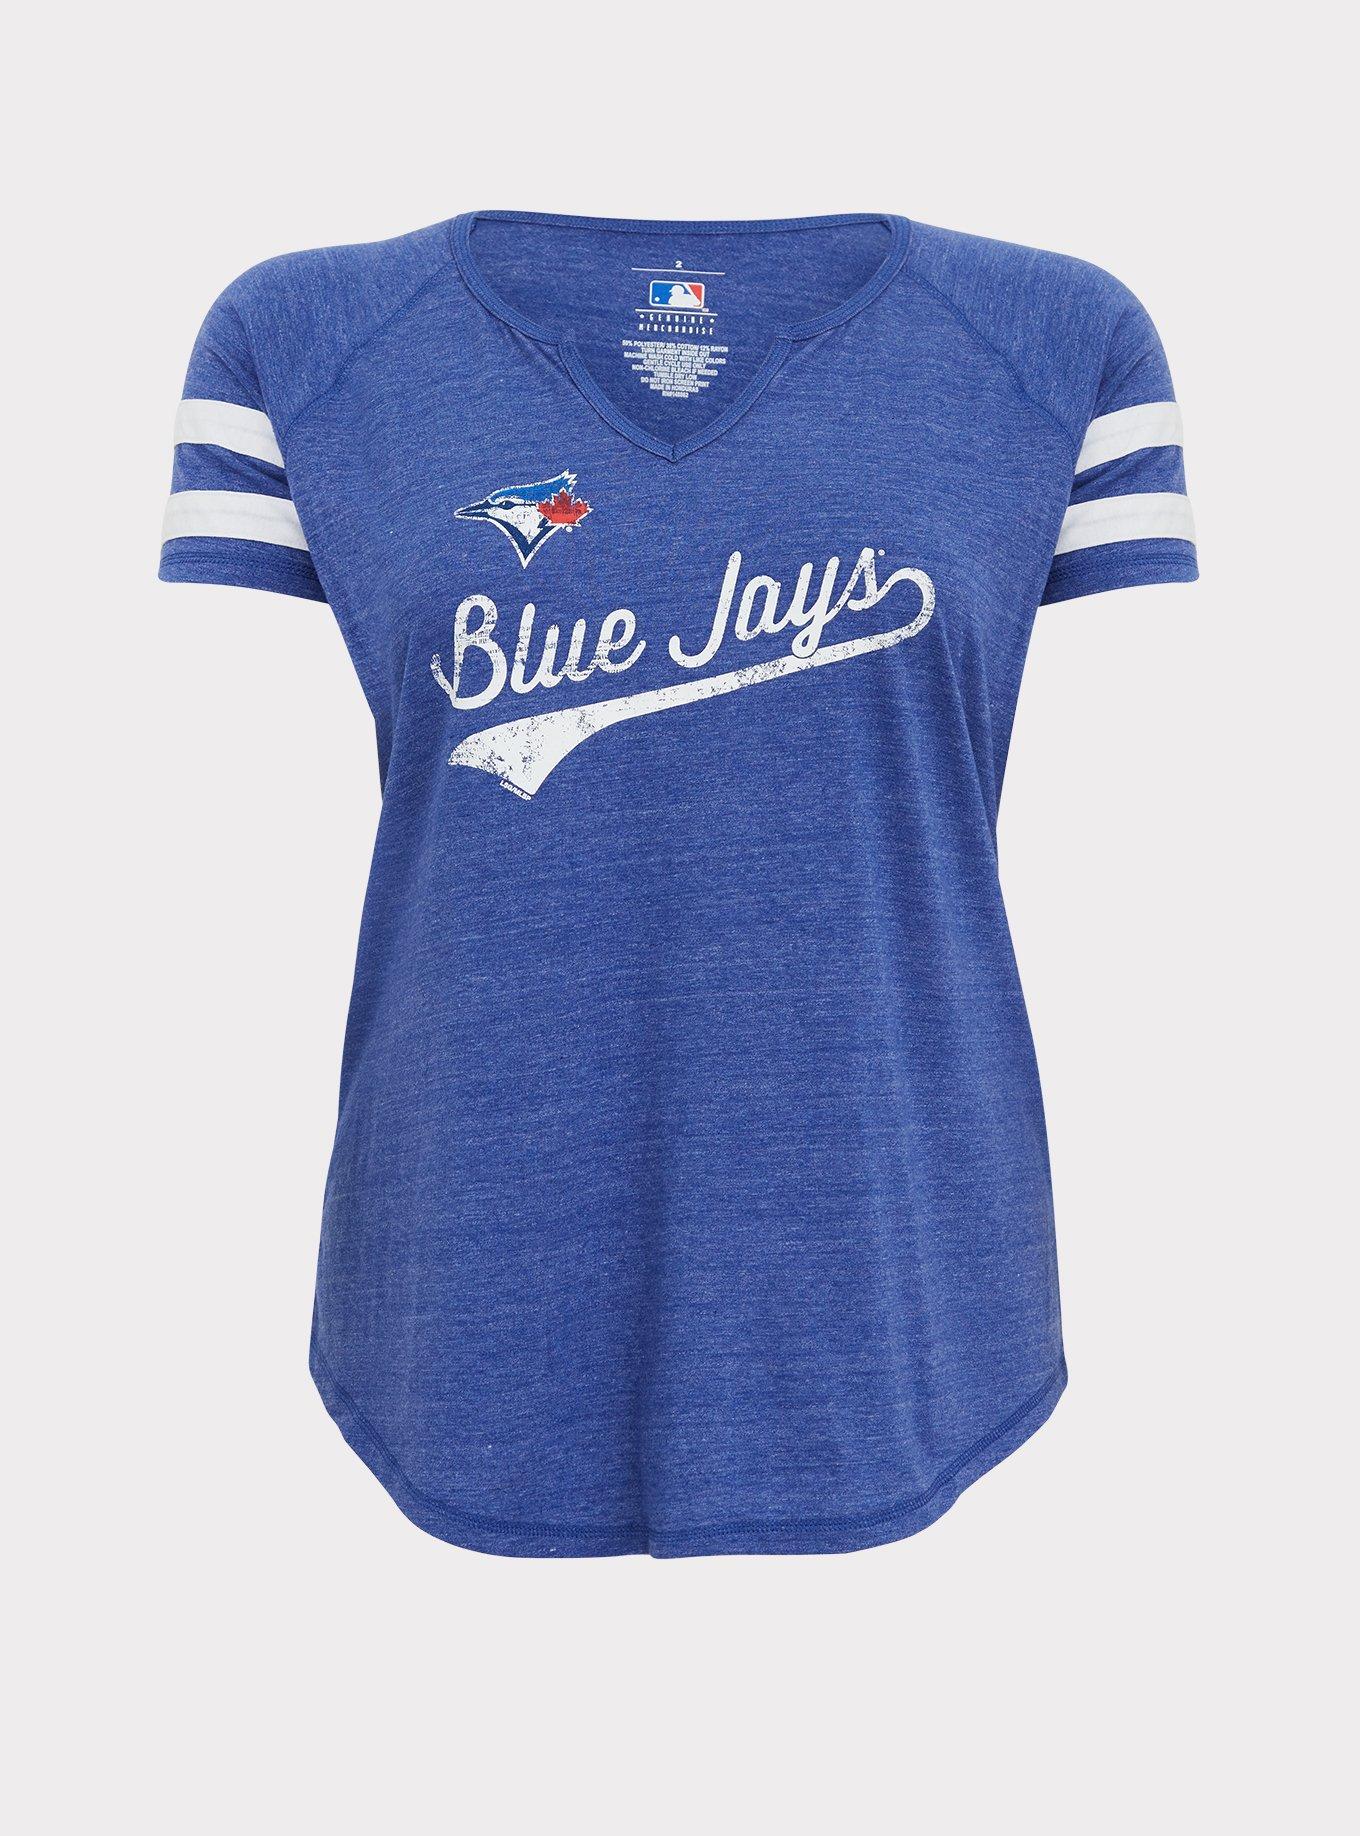 Toronto Blue Jays Blue Jays Ladies plus Size Baseball Jersey